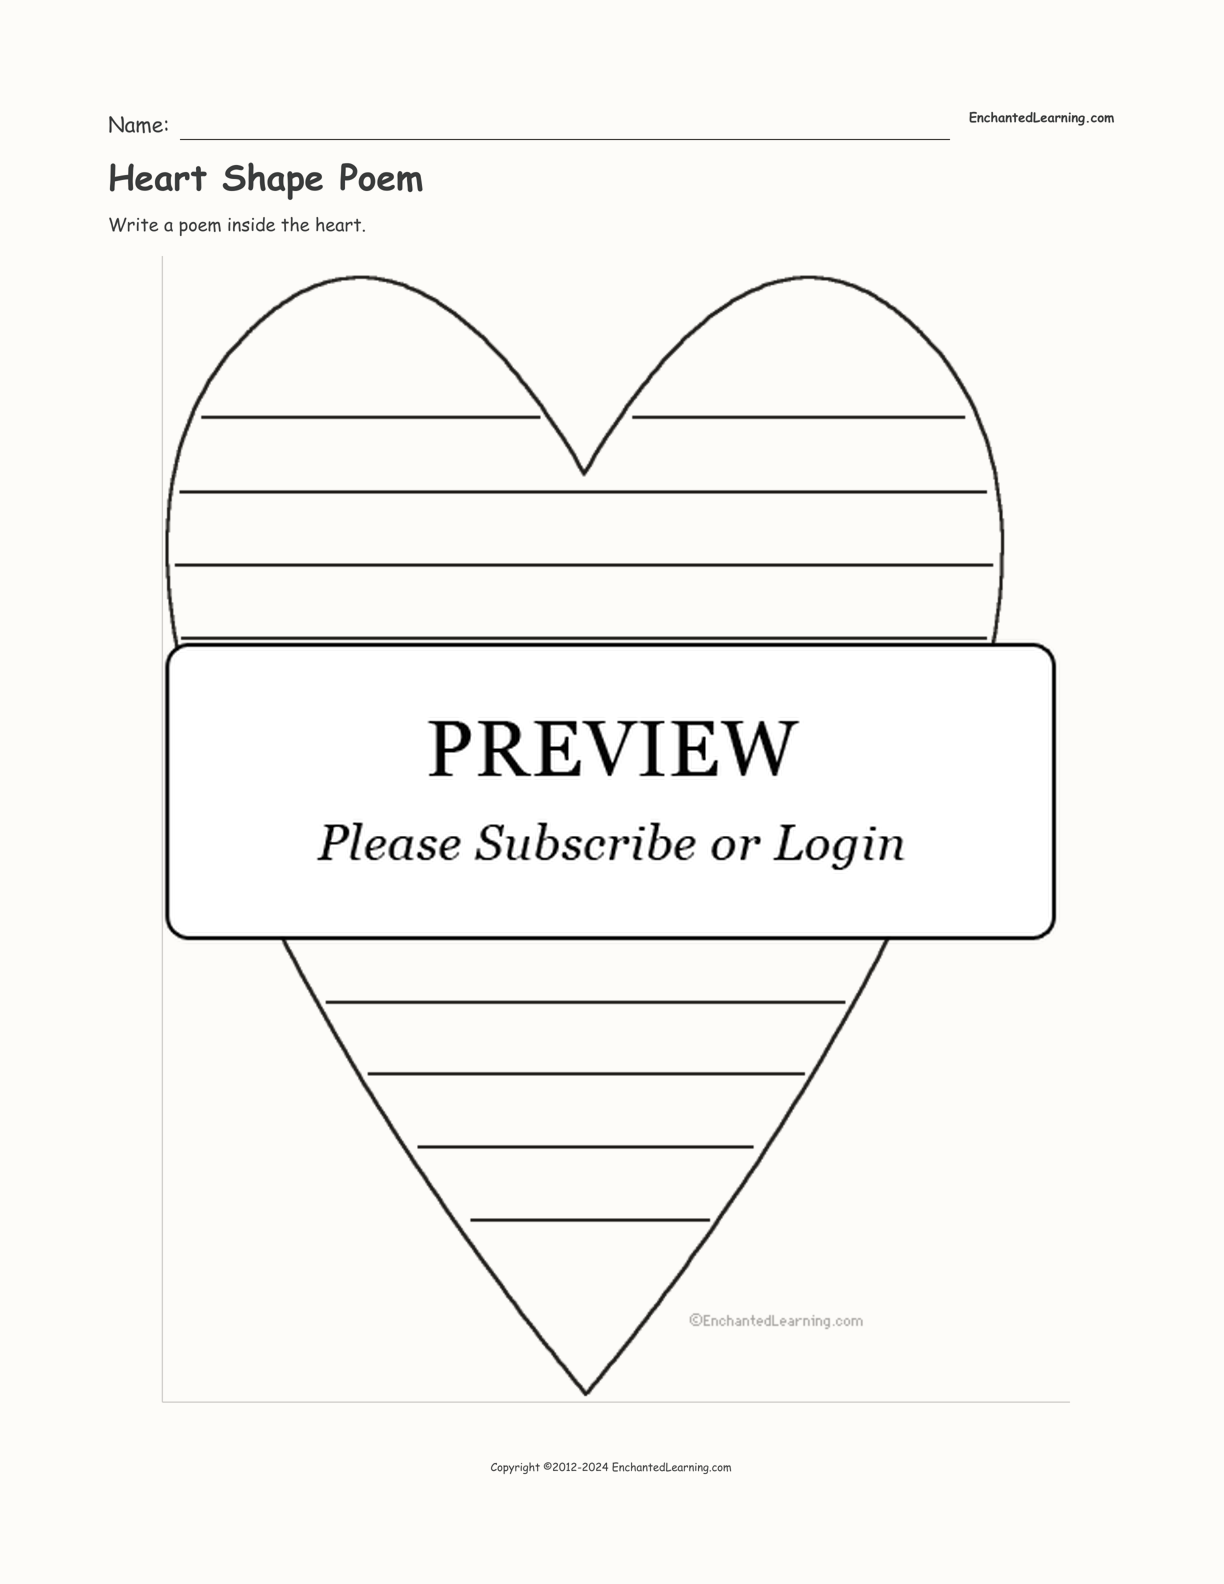 Heart Shape Poem interactive worksheet page 1